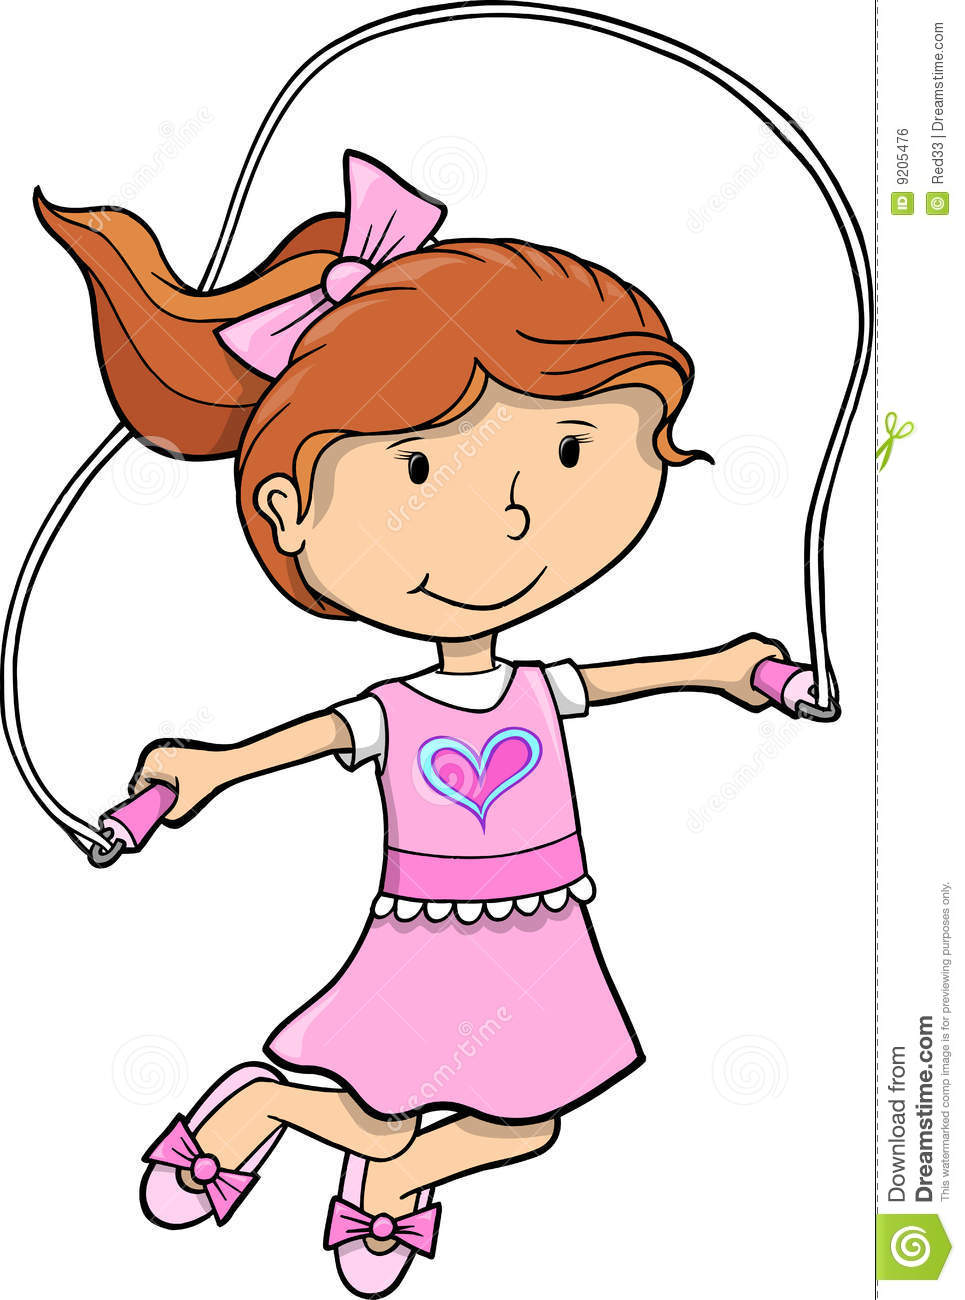 Jump Rope Girl Vector Royalty Free Stock Image   Image  9205476